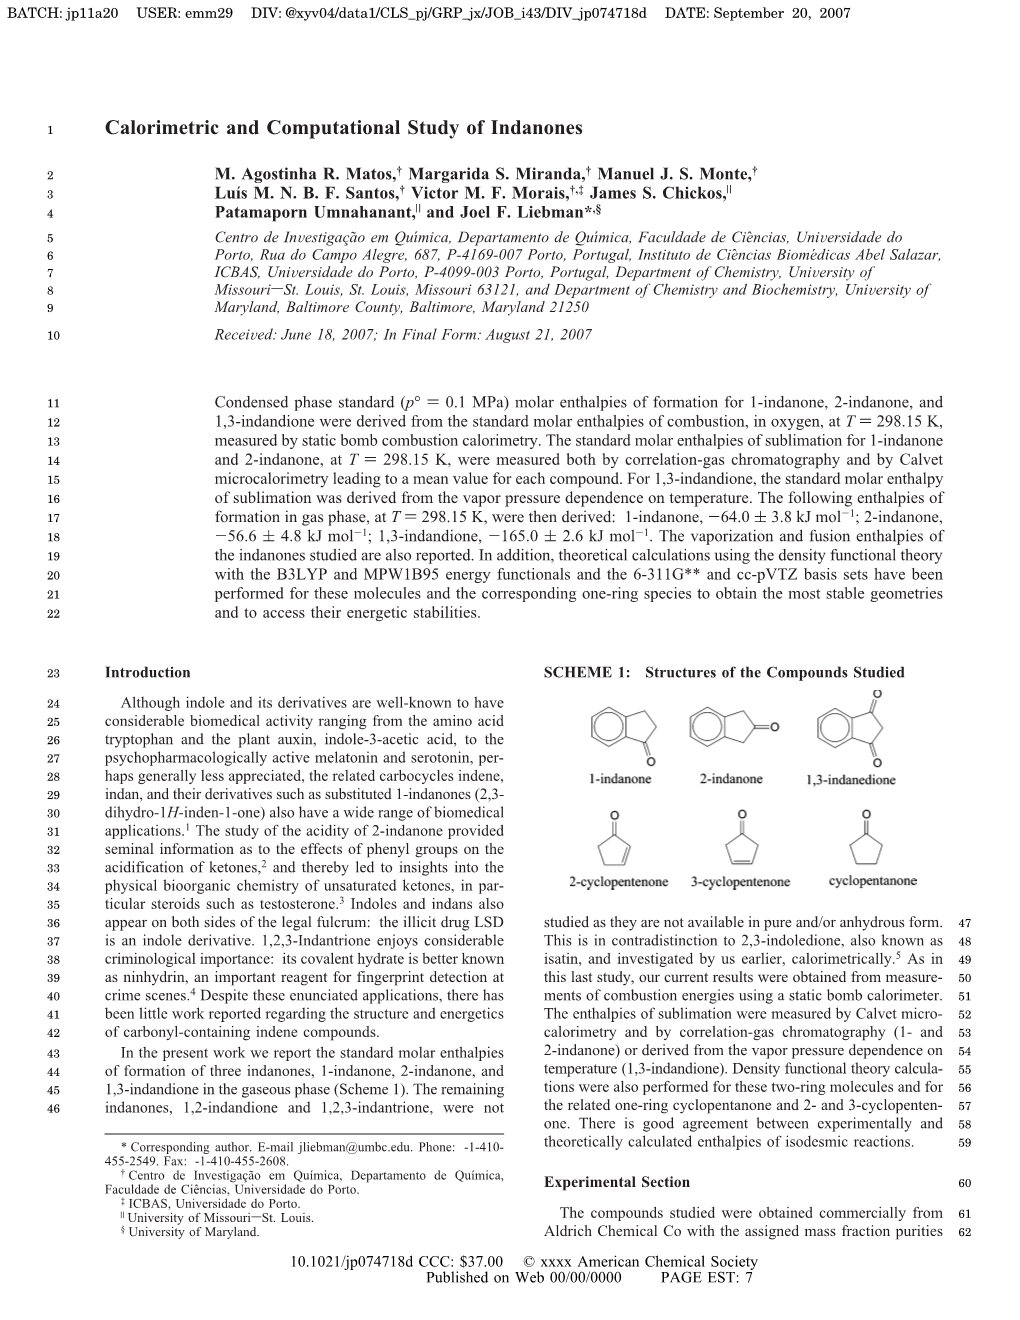 Calorimetric and Computational Study of Indanones